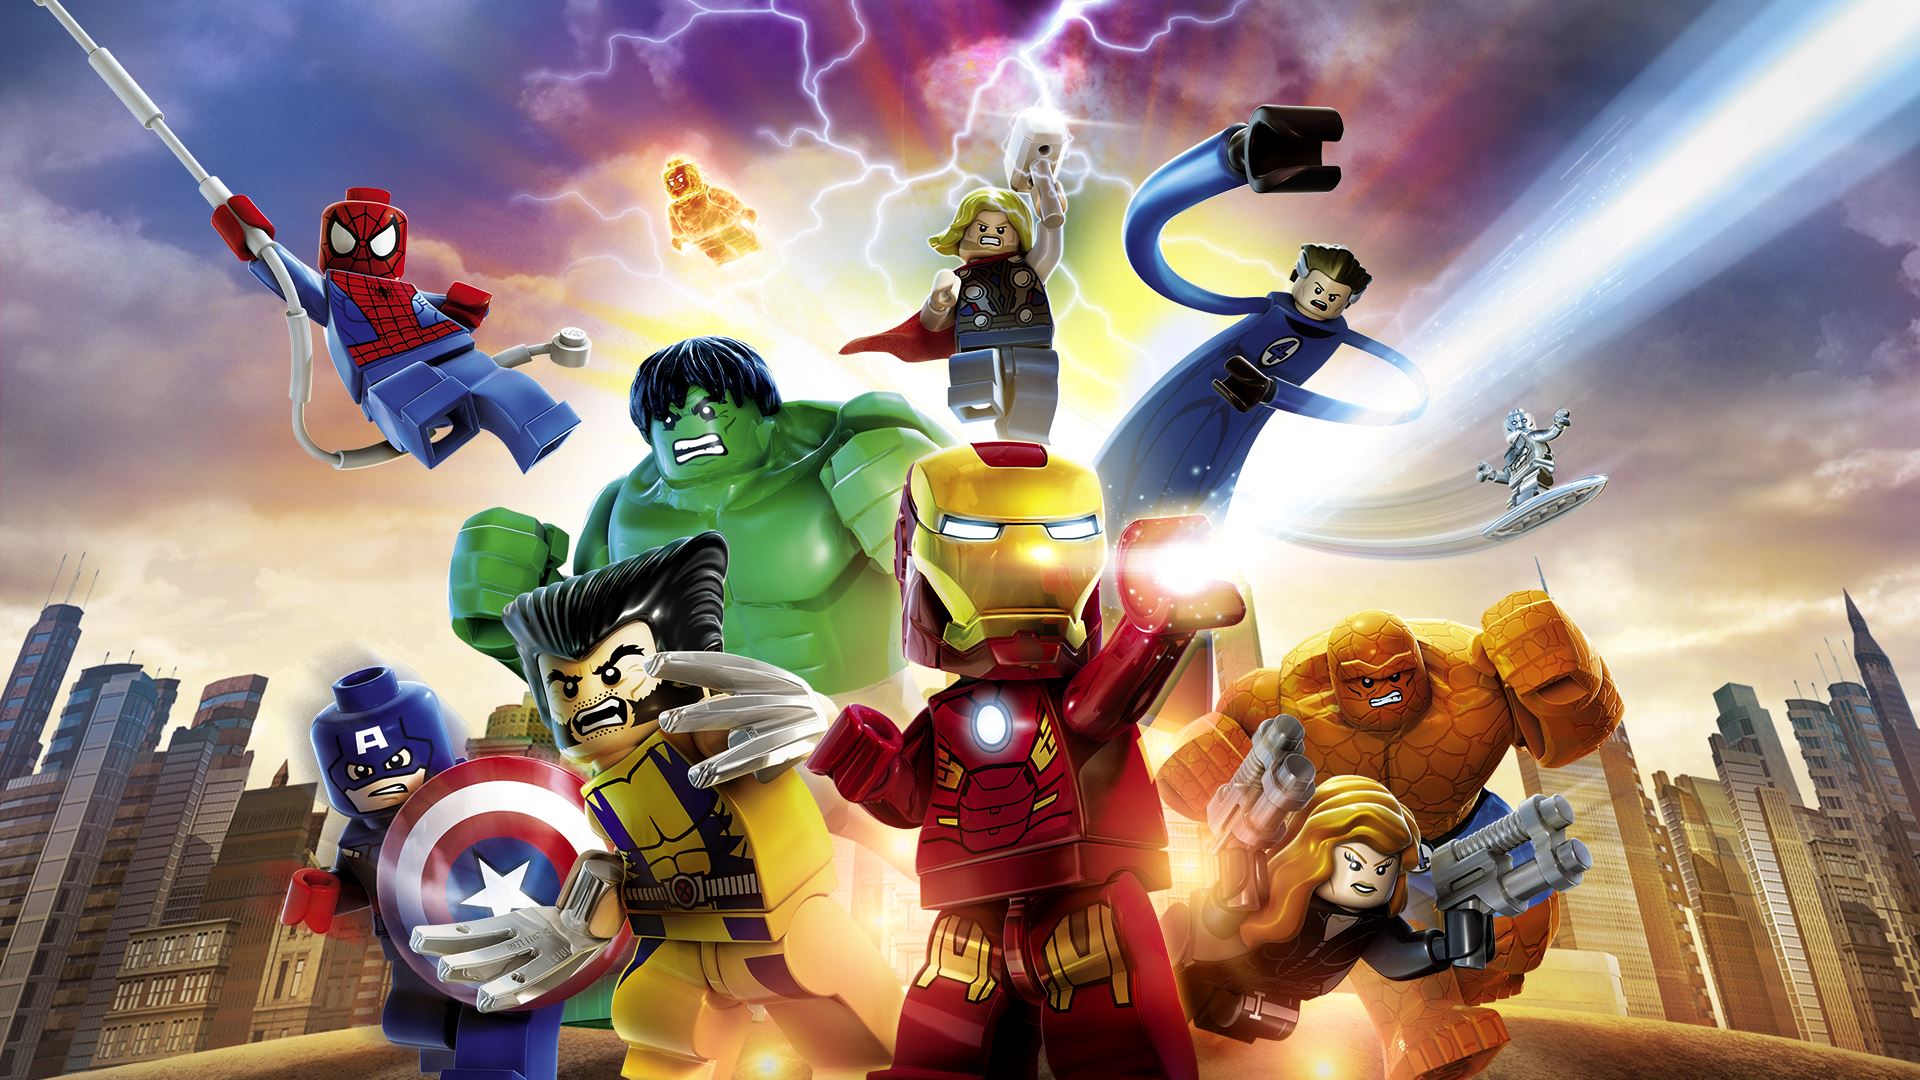 Intrusión En segundo lugar mantequilla LEGO Marvel Super Heroes Character List - GameRevolution